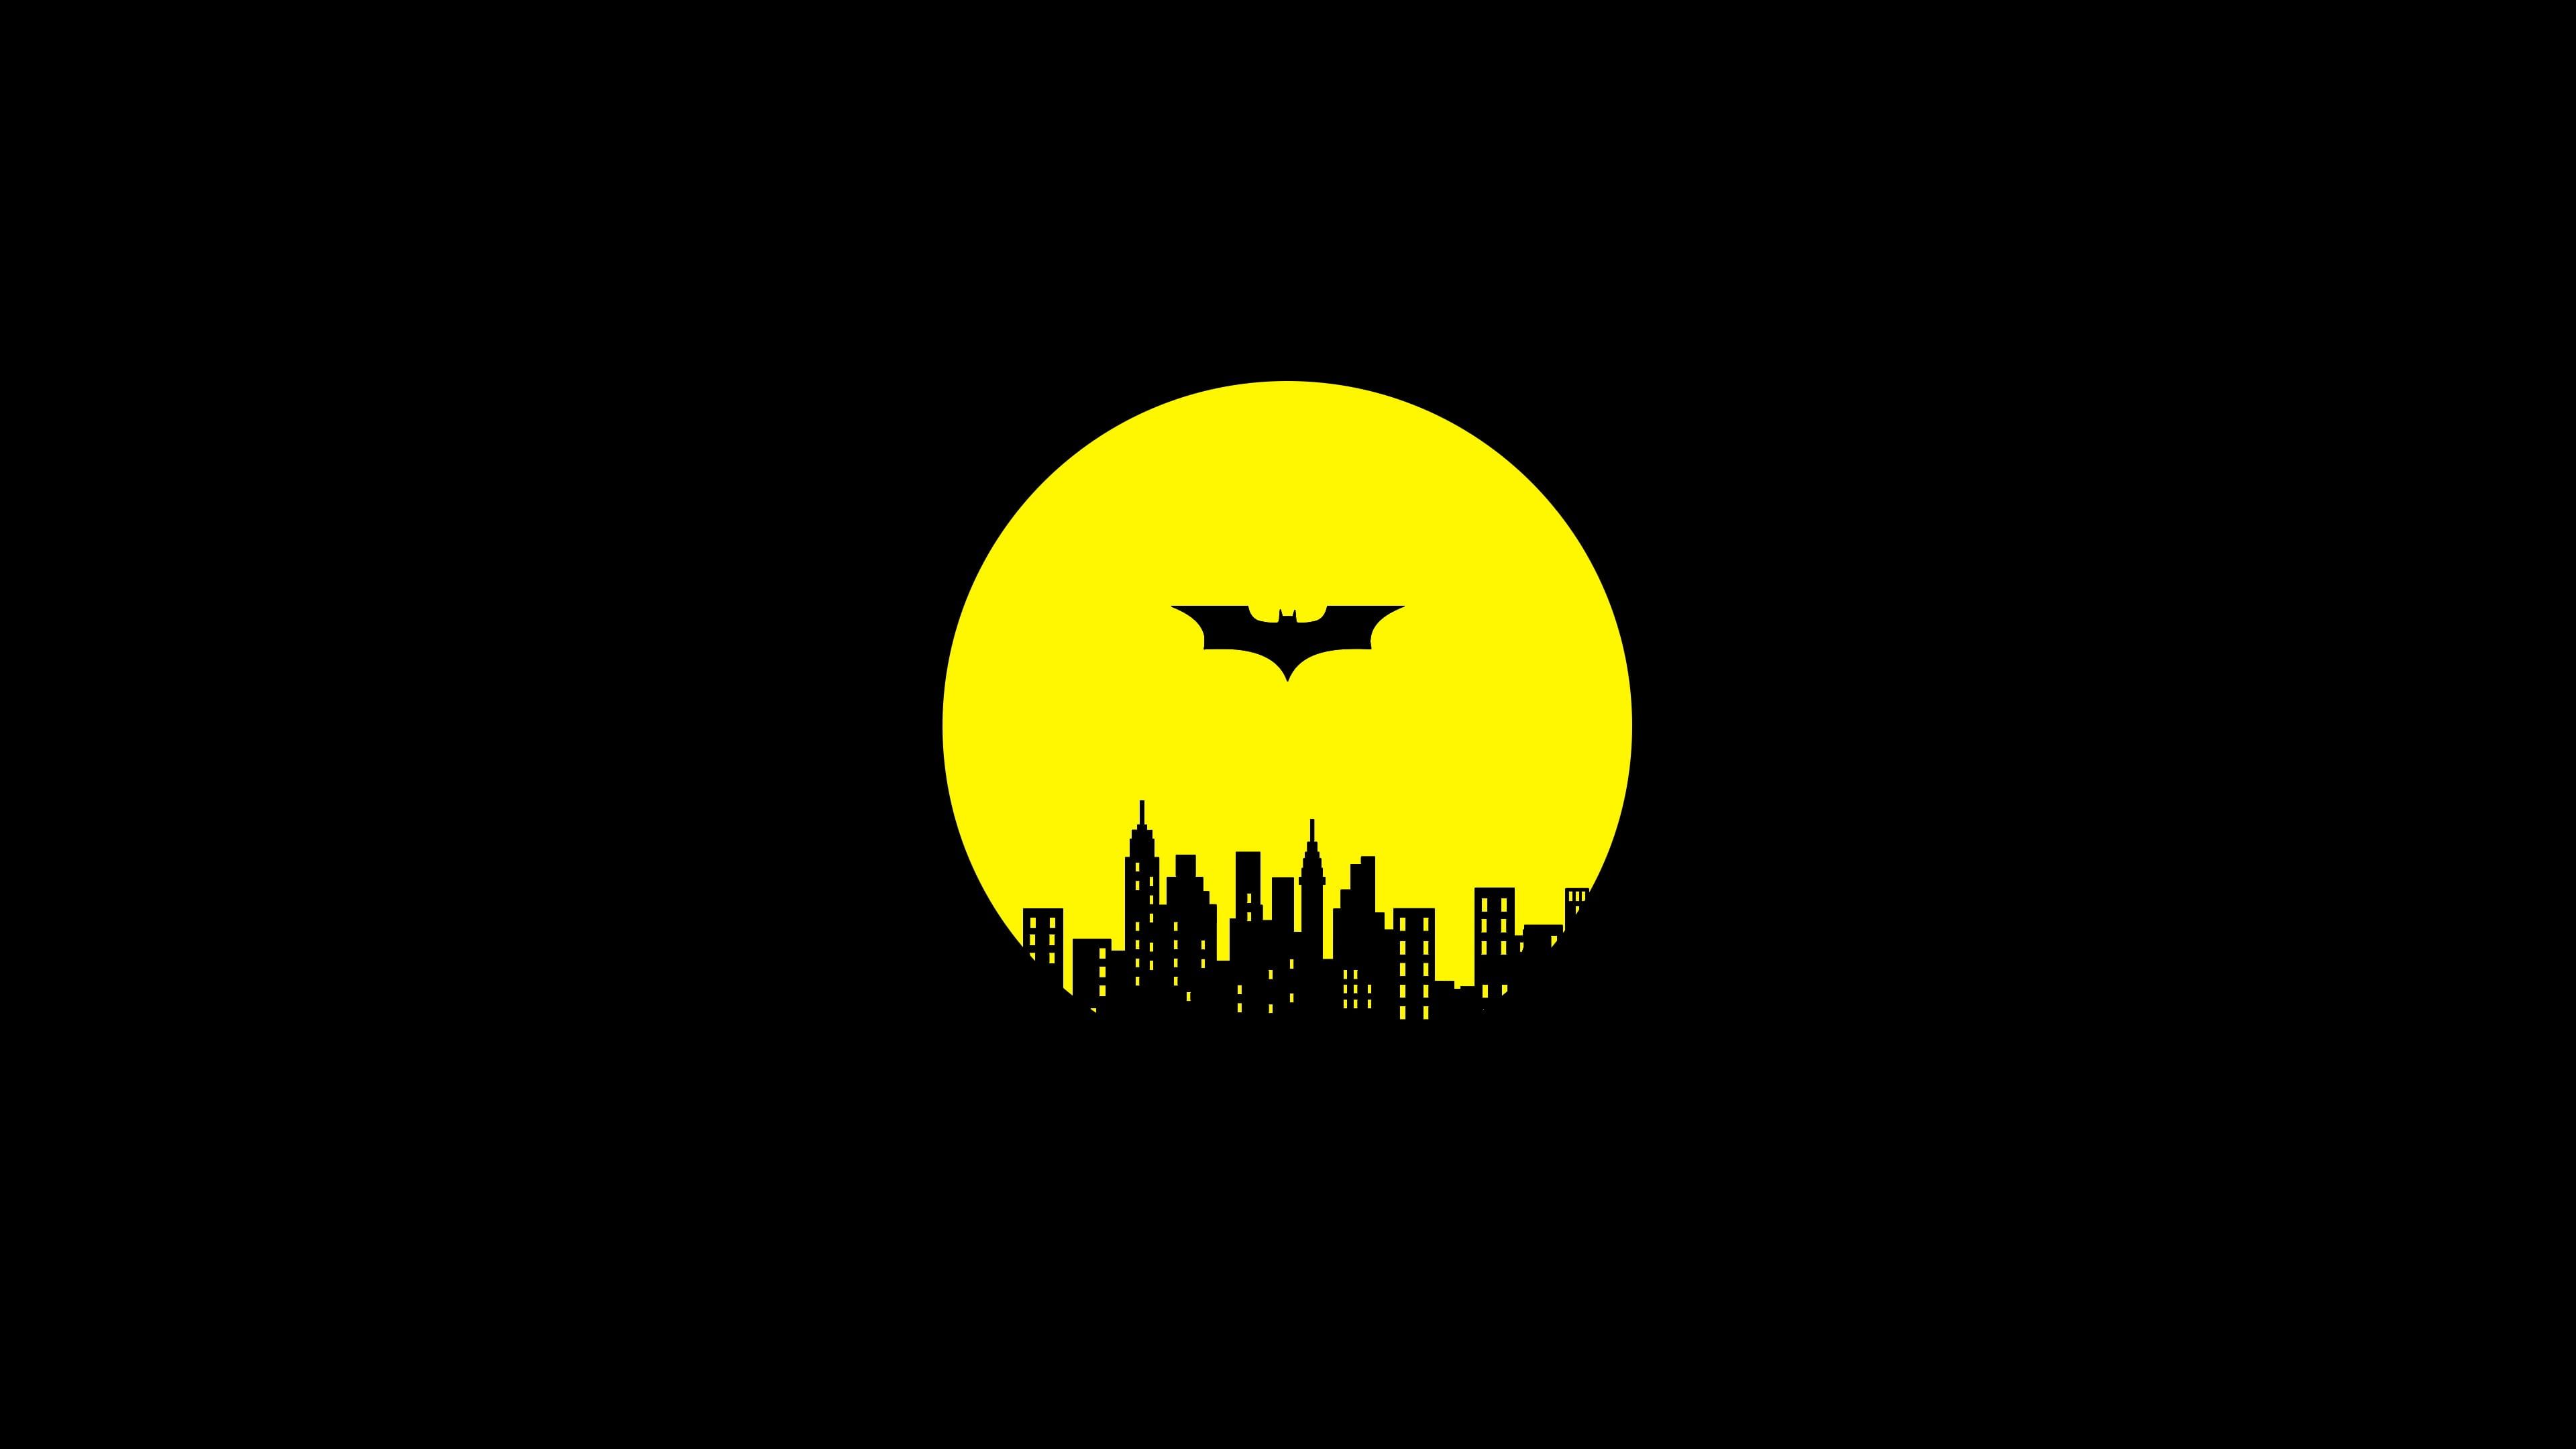 Batman logo #batman gotham city #night #guardian #darknight